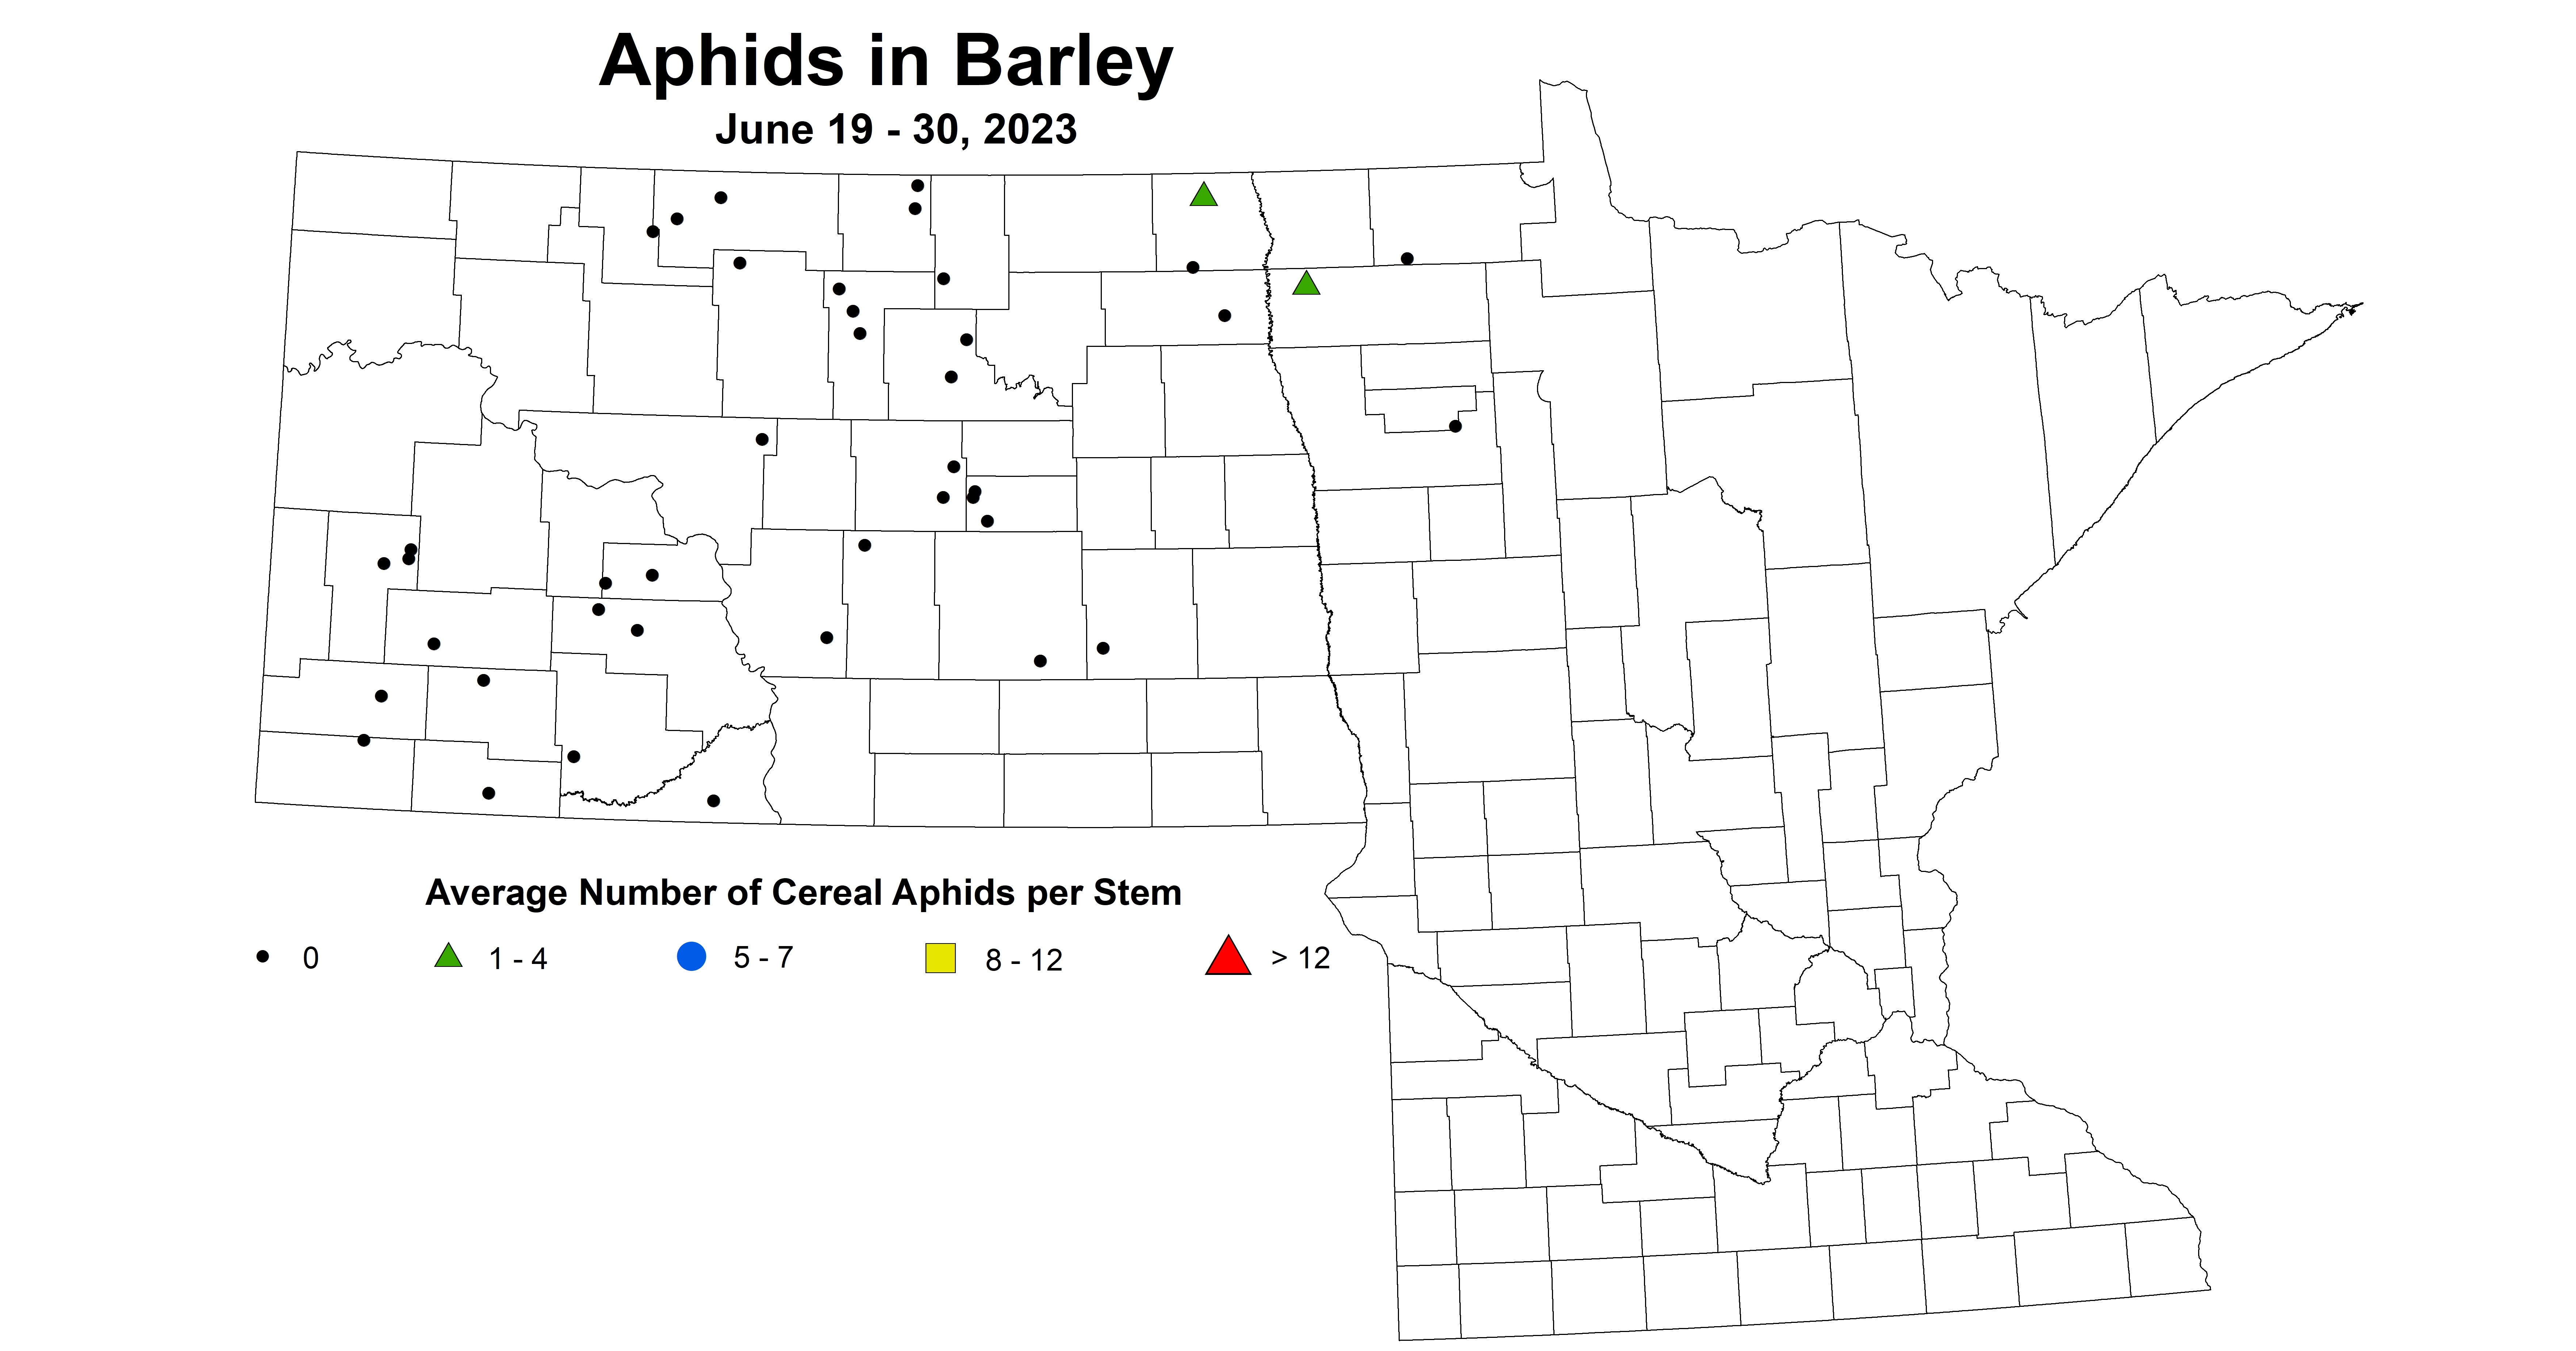 barley aphids June 19-30 2023